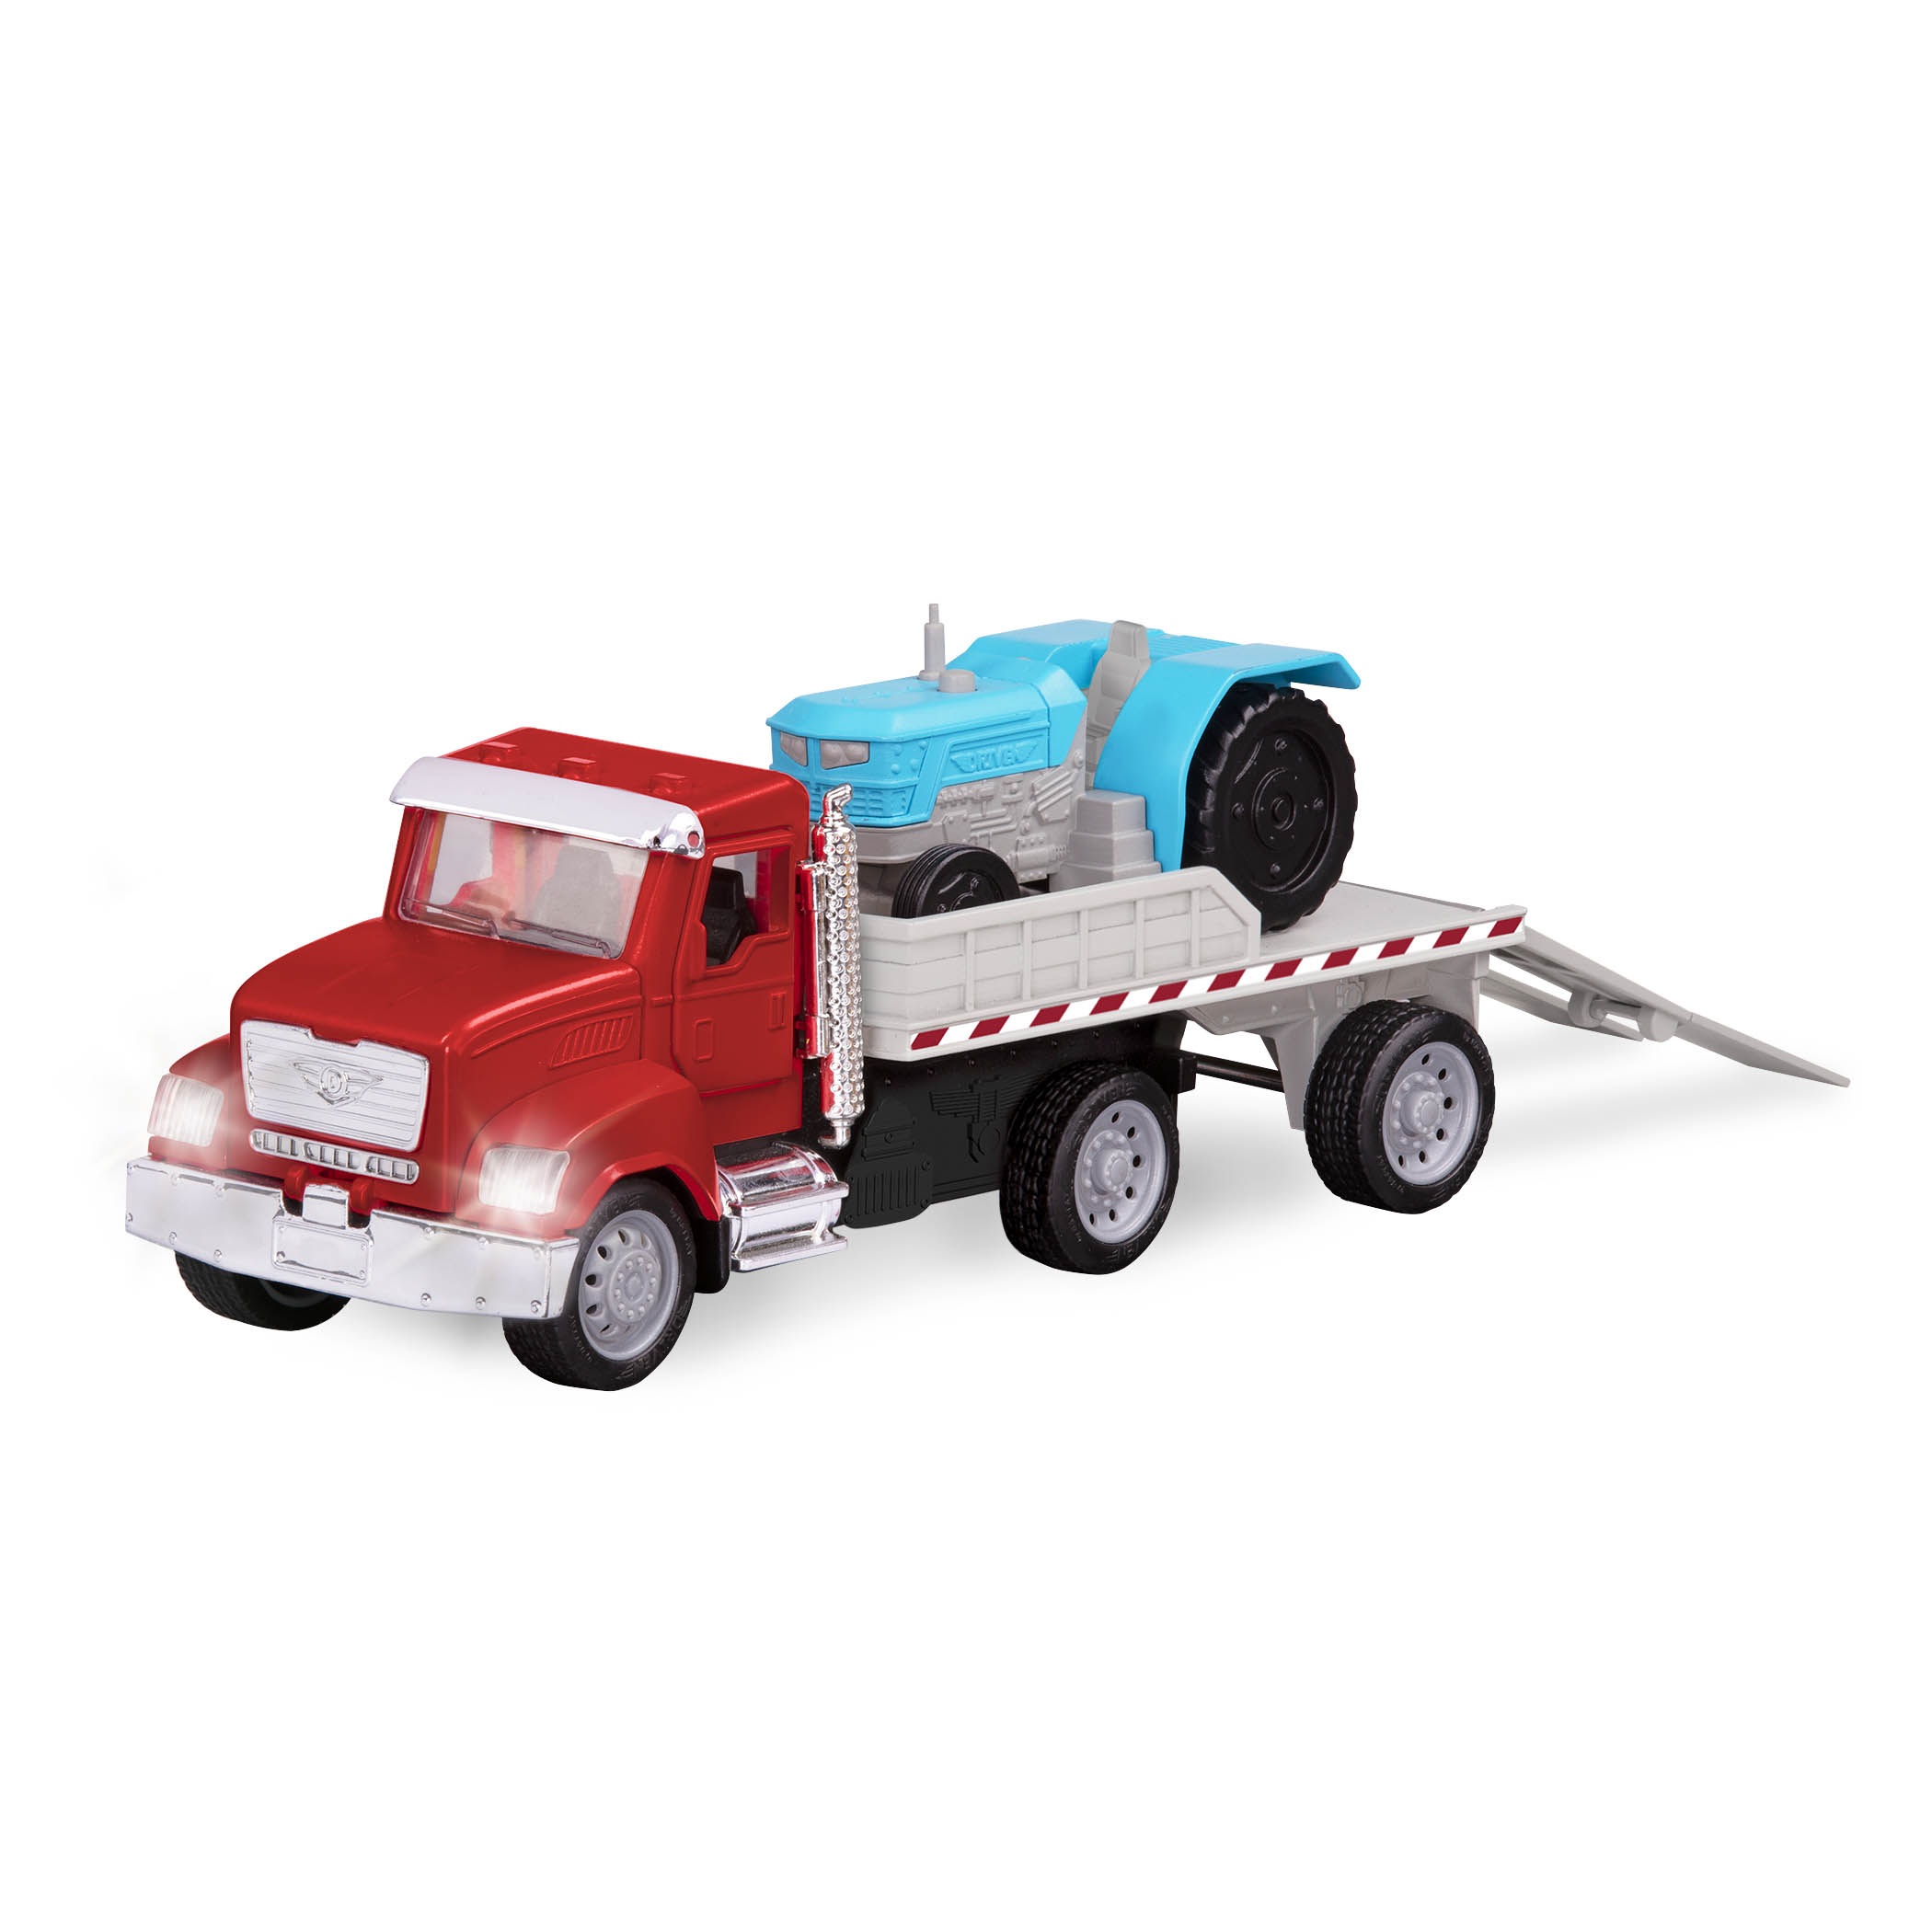 Micro Flatbed Truck Small Toy Farm